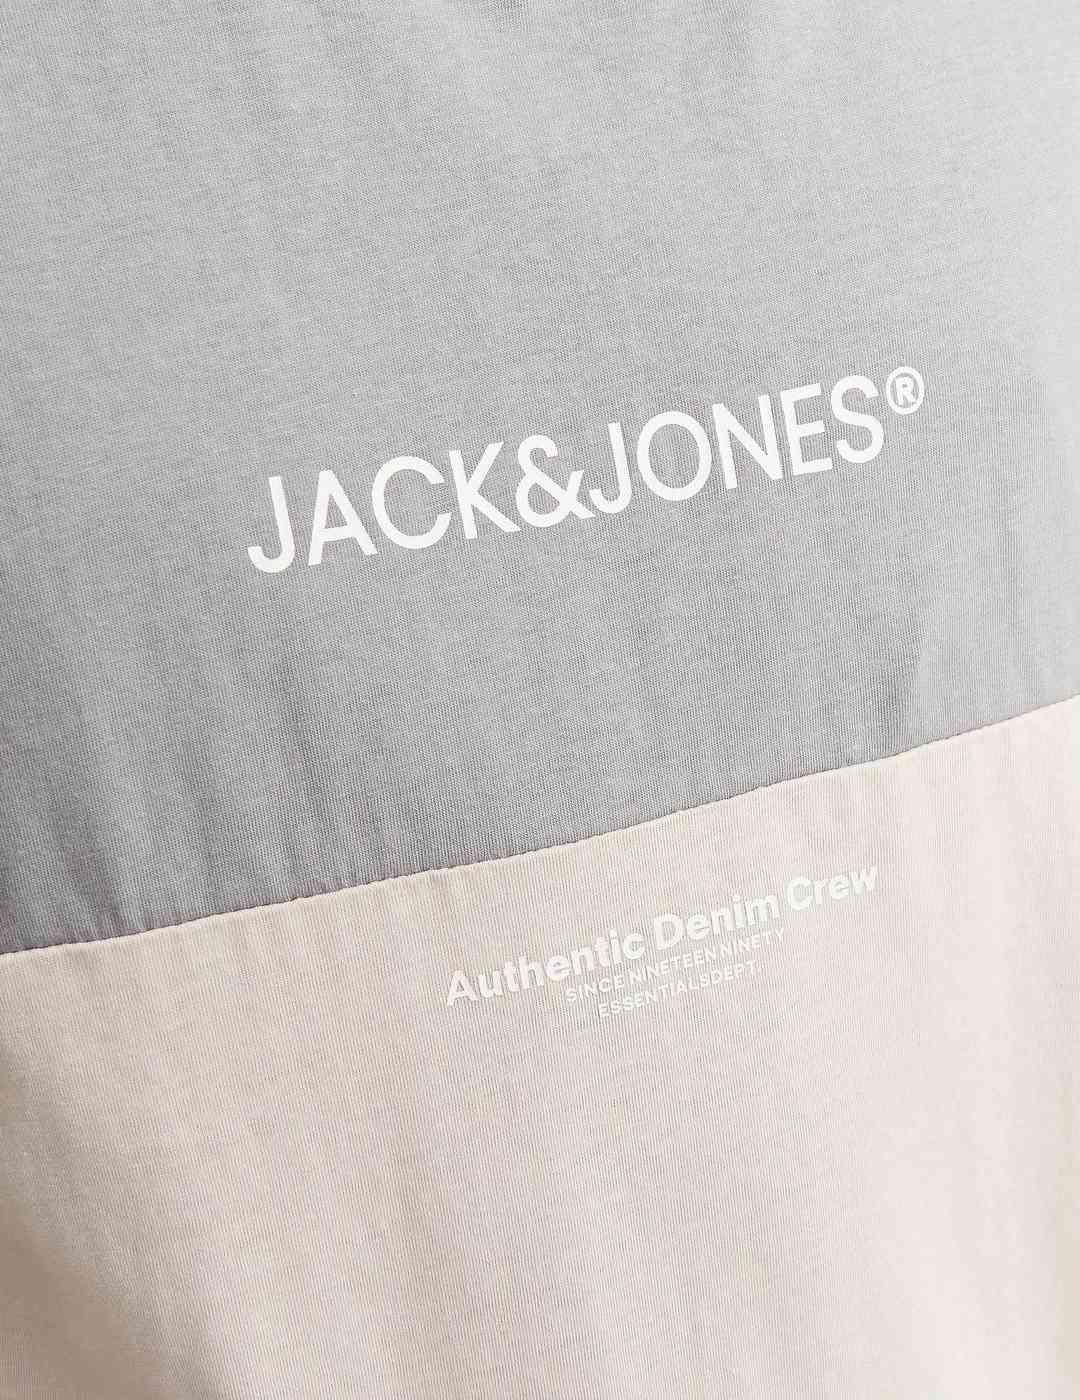 Camiseta Jack&Jones Ryder gris de manga corta para hombre